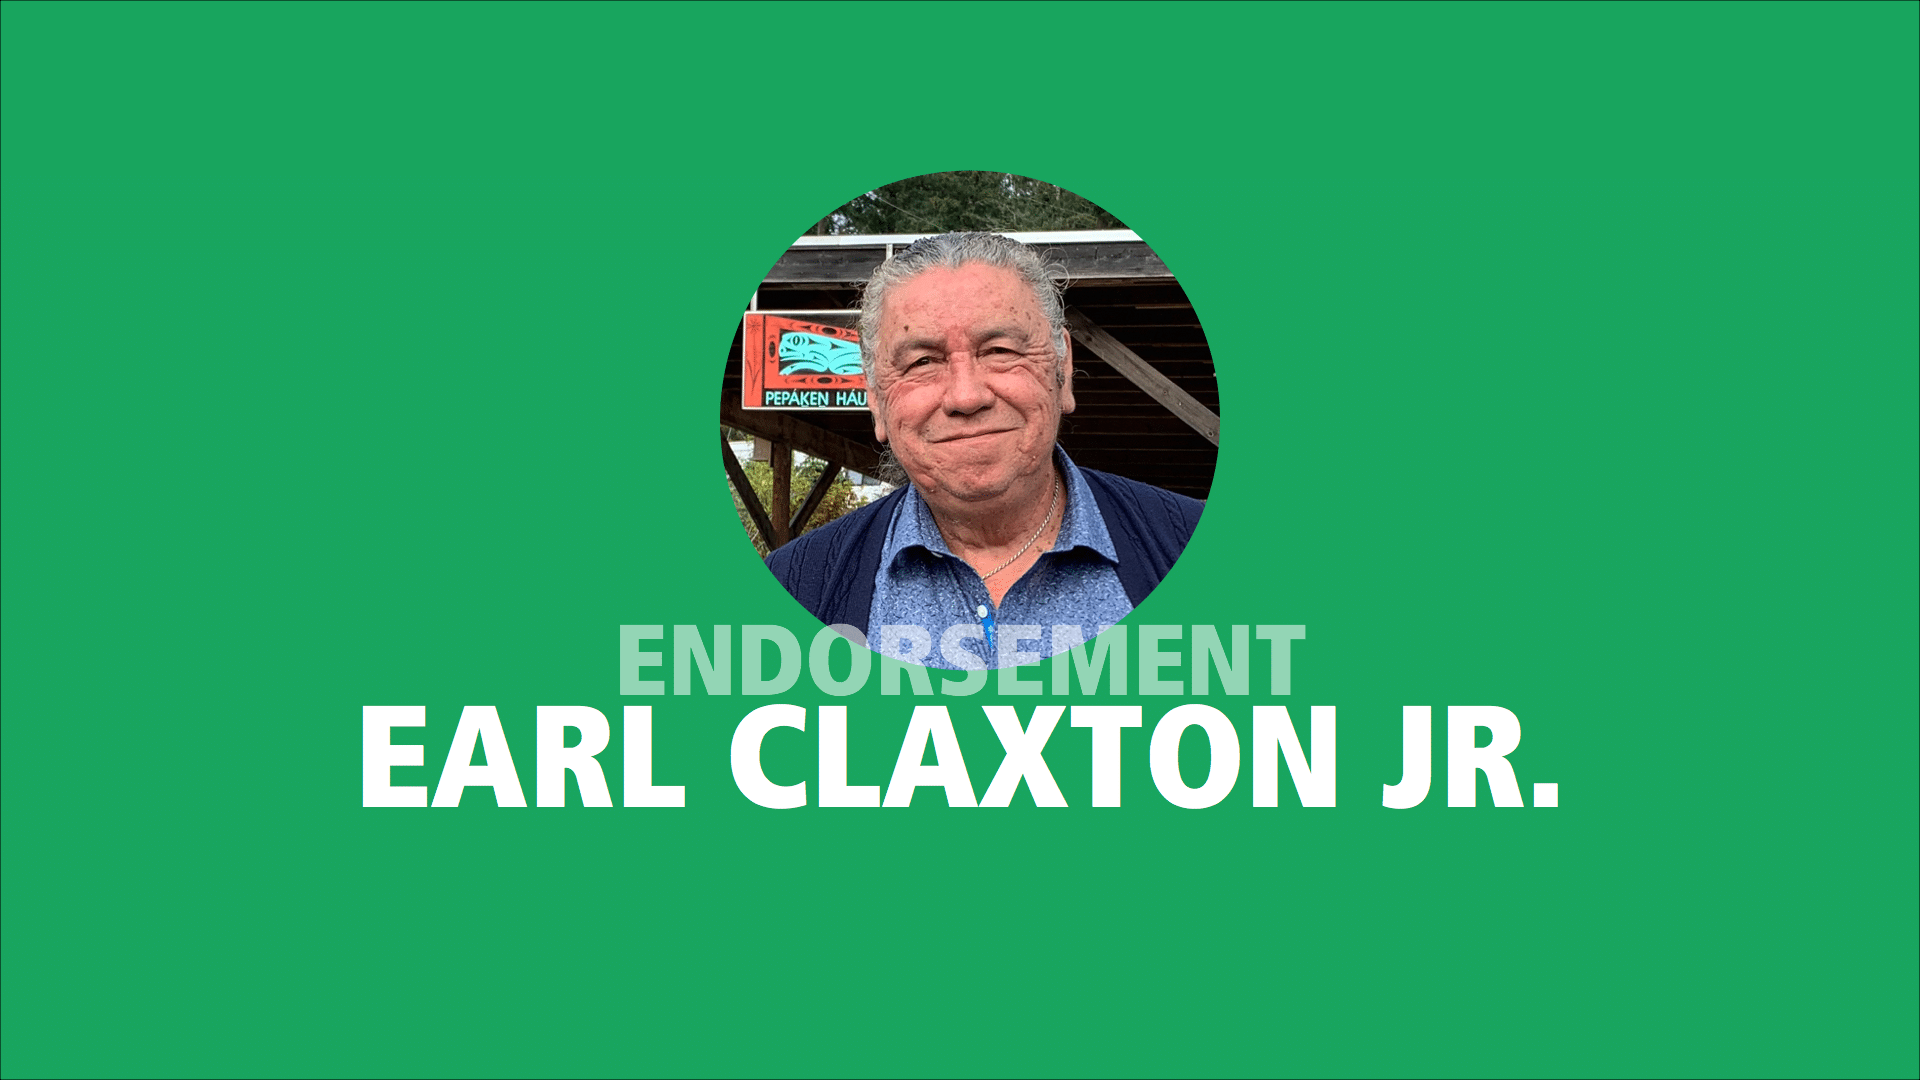 Earl Claxton Jr. endorses Adam Olsen